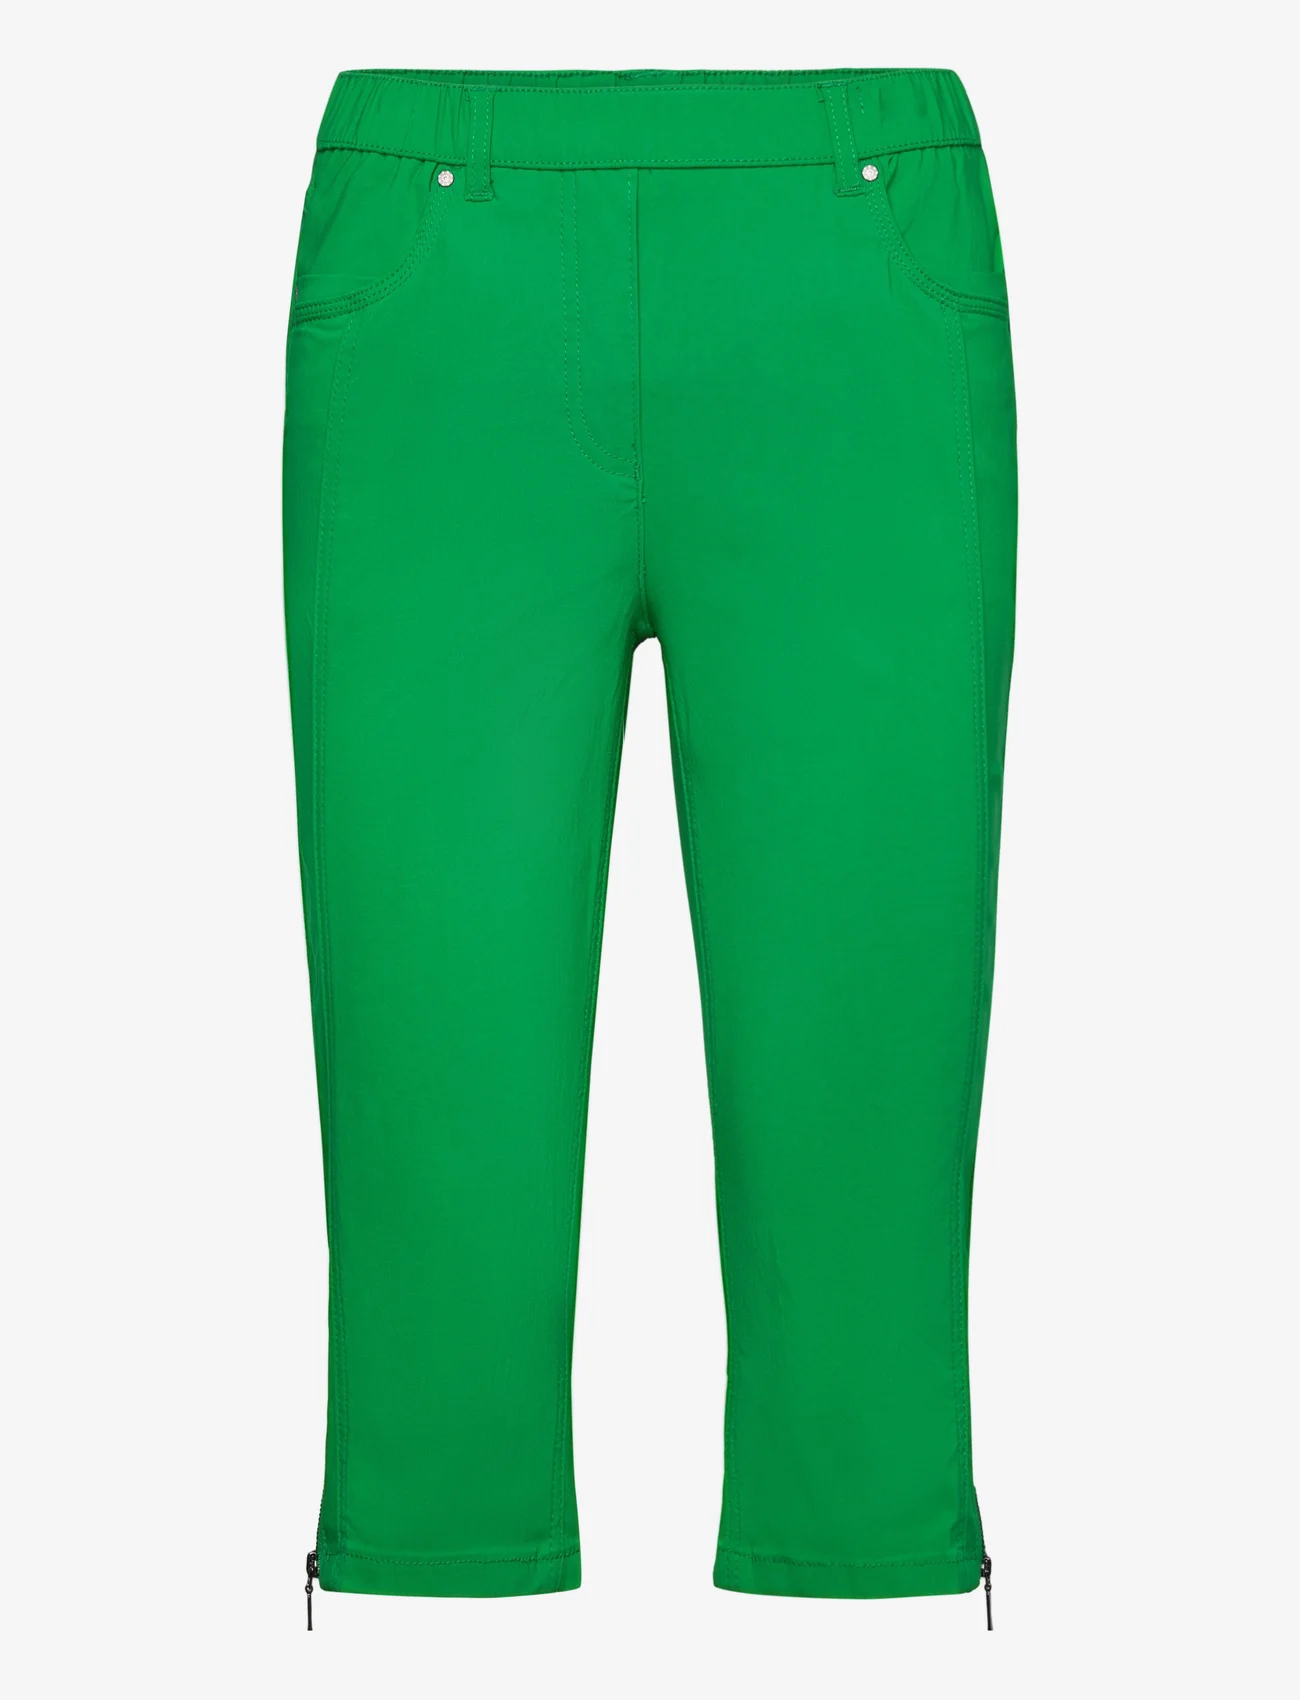 Brandtex - Capri pants - capribukser - bright green - 0